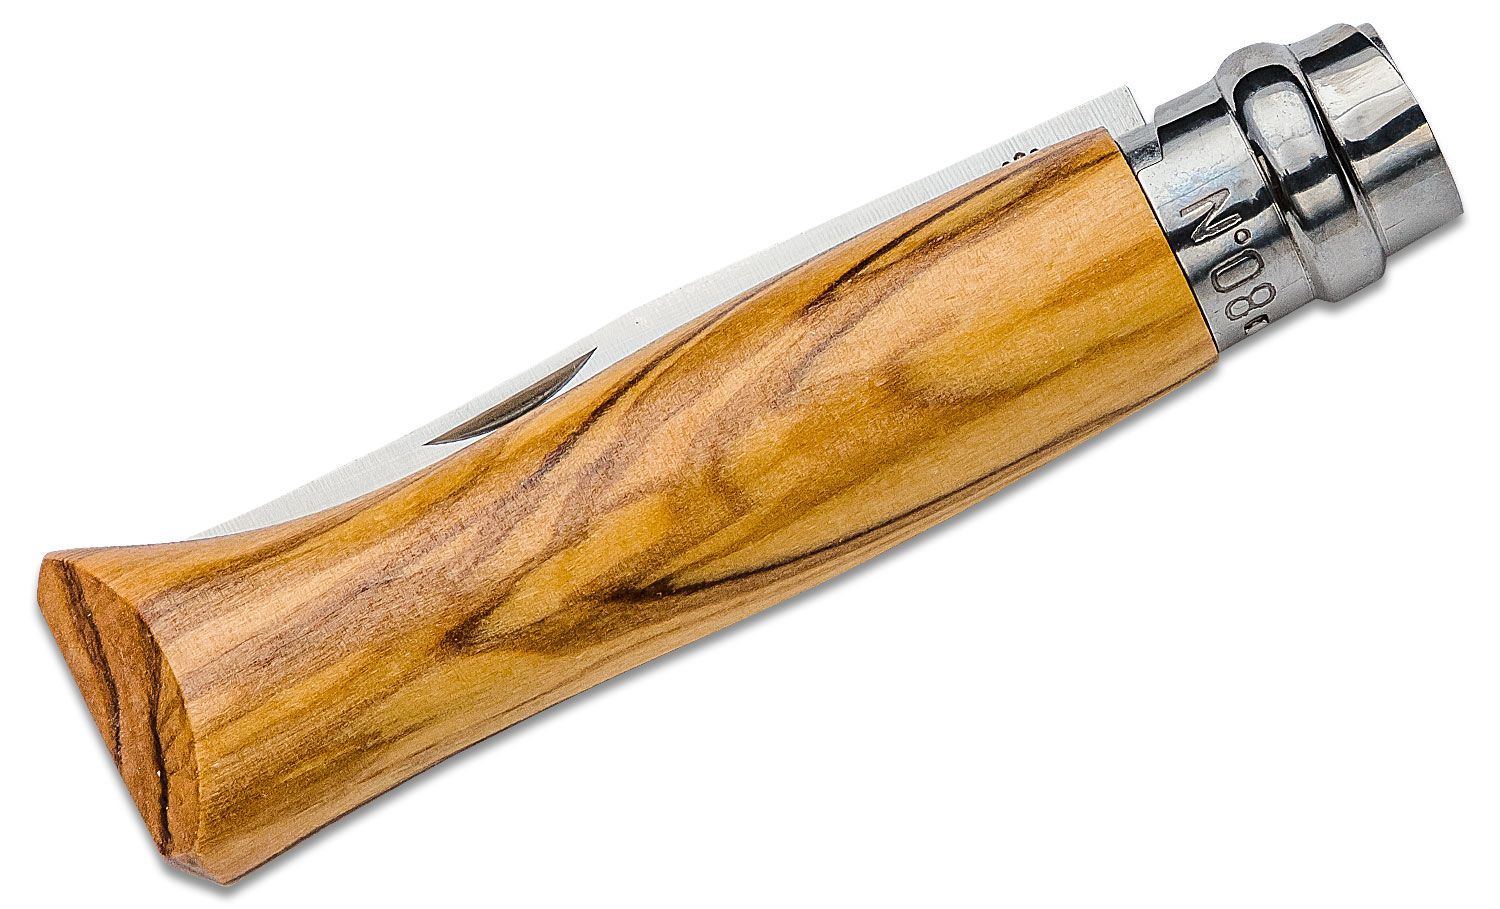 Knife ring Olive wood handle